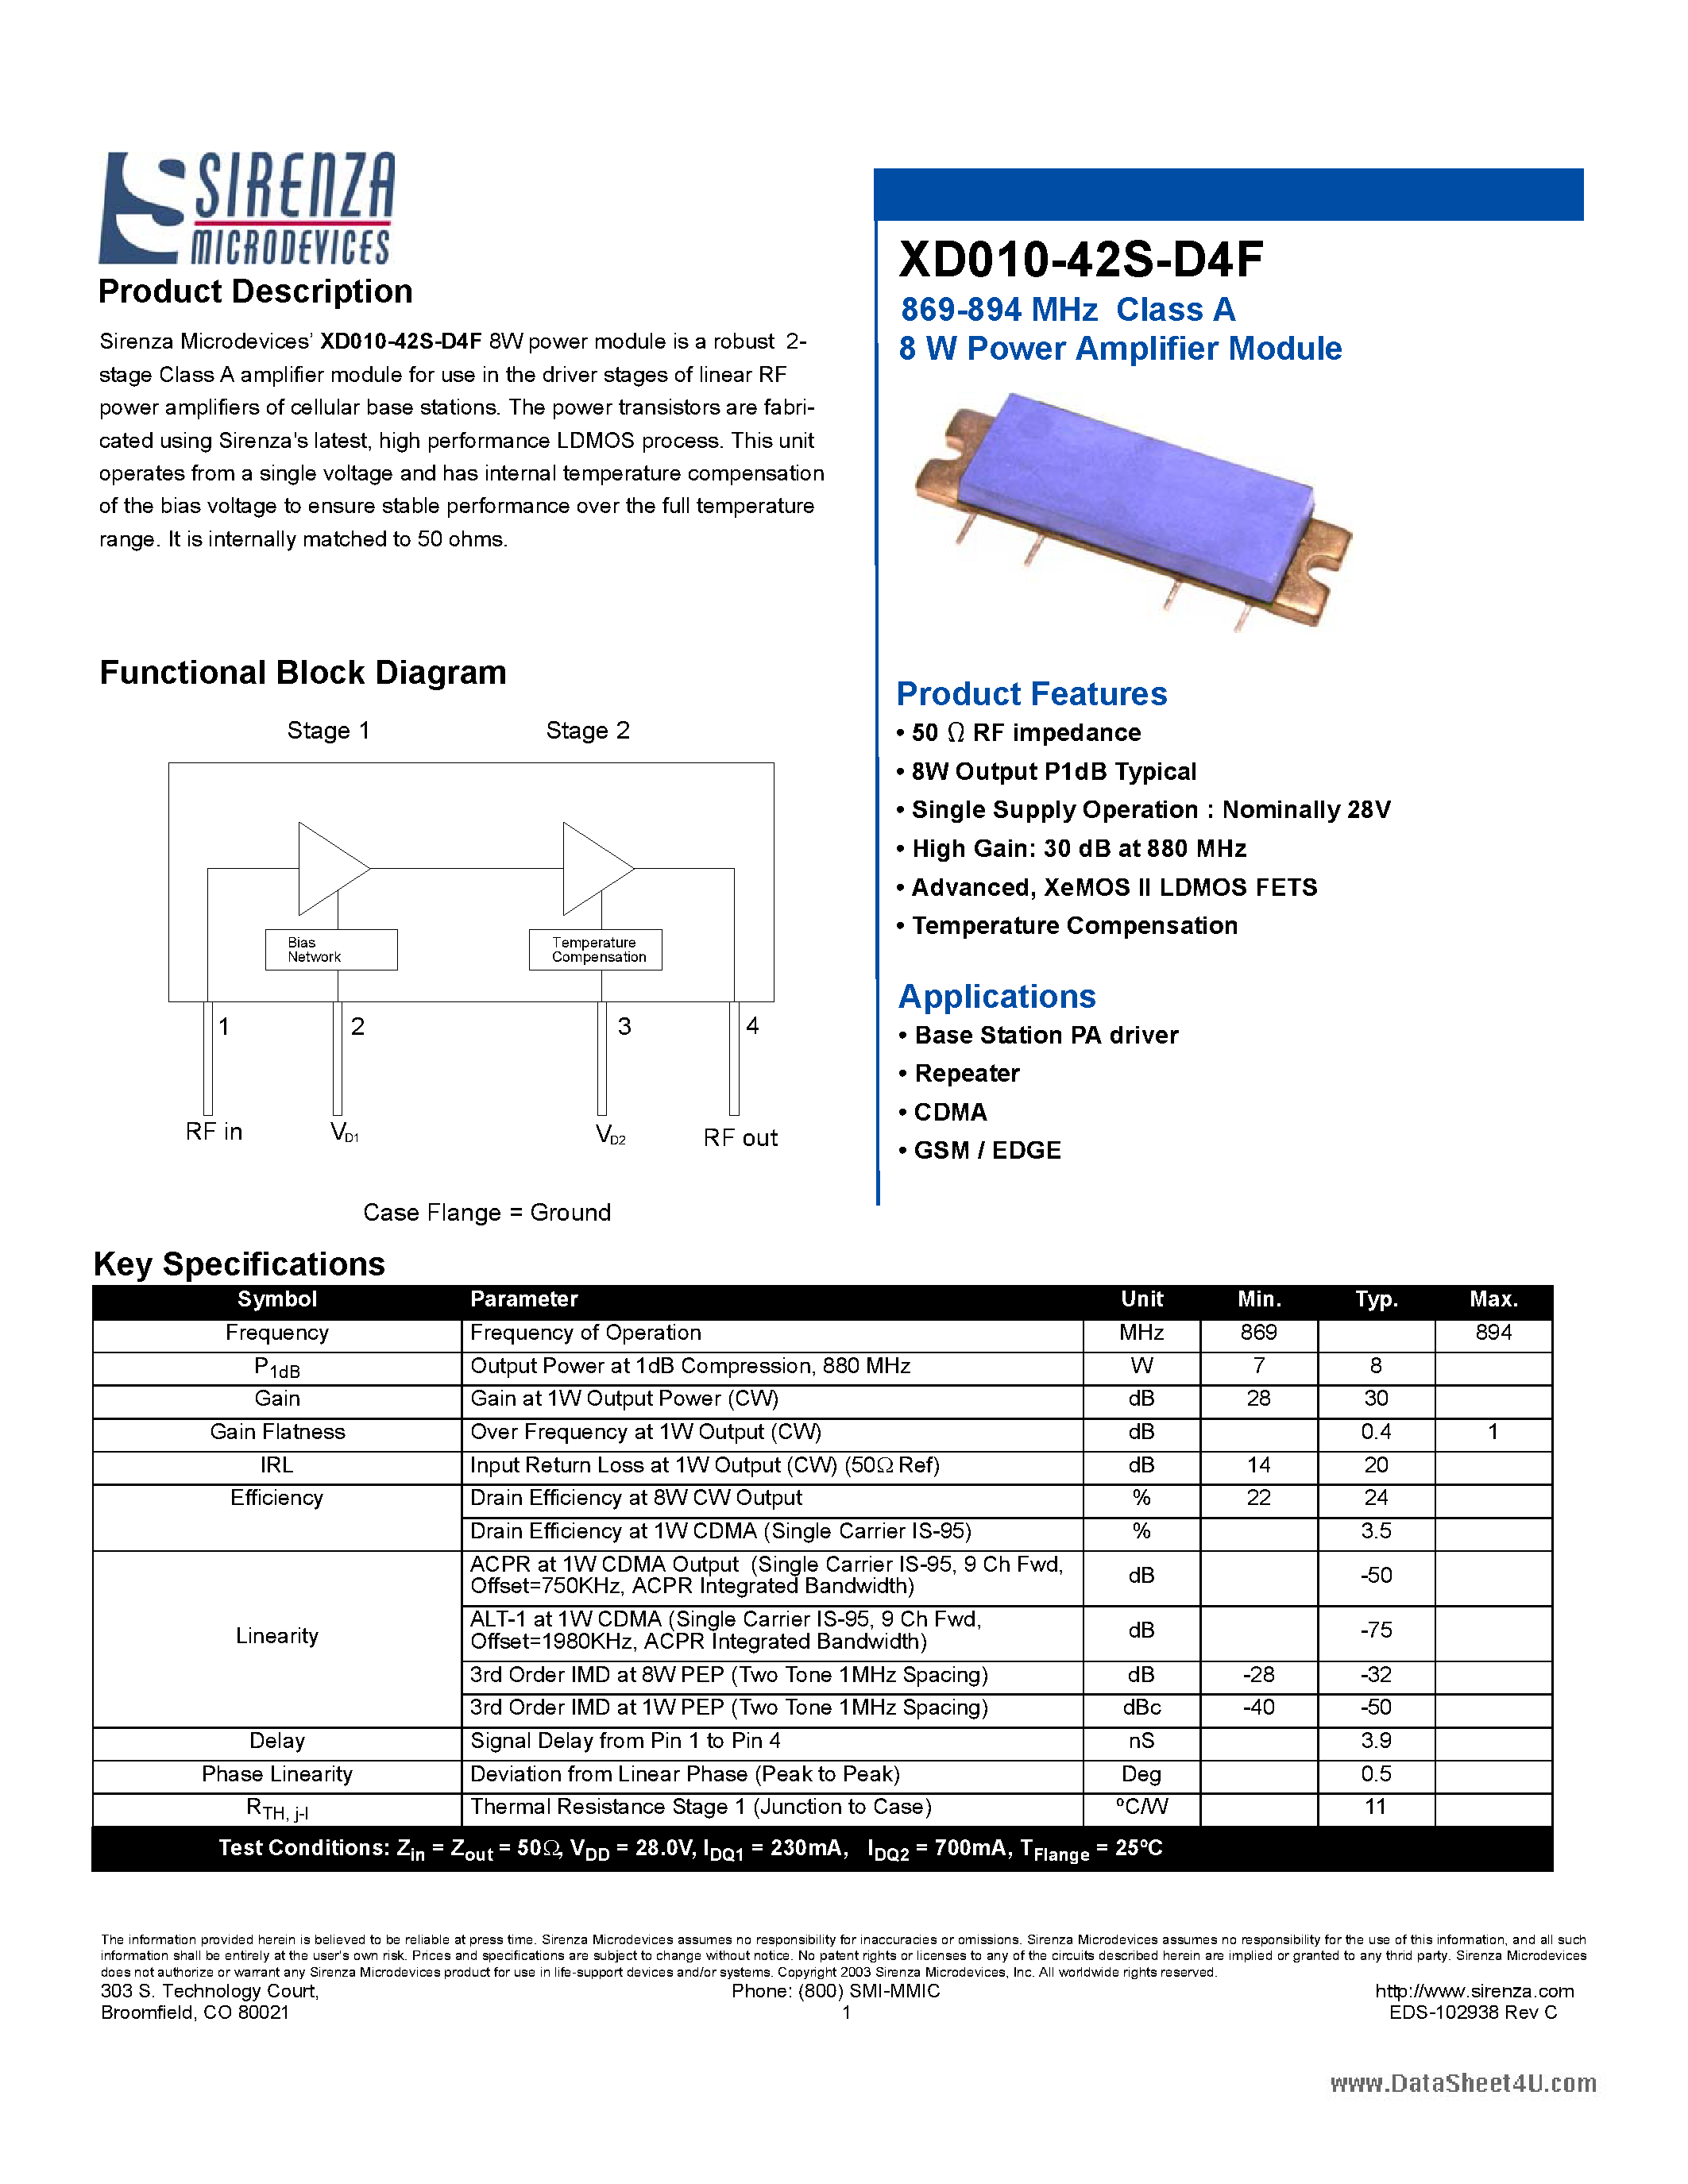 Datasheet XD010-42S-D4F - Class A 8 W Power Amplifier Module page 1